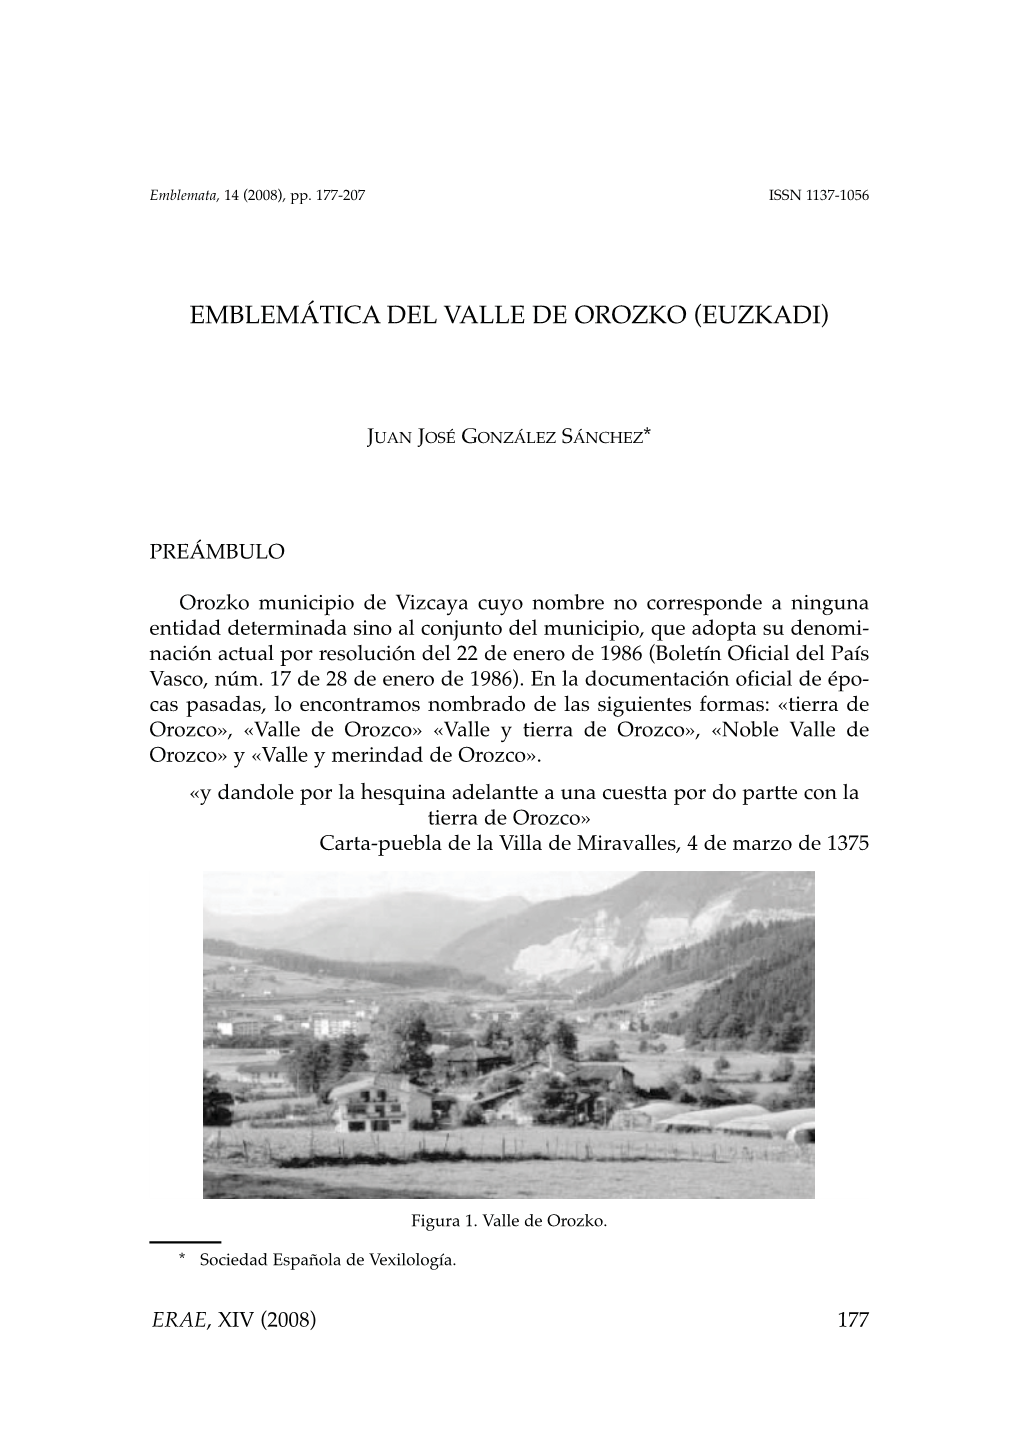 7. Emblemática Del Valle De Orozko (Euzkadi), Por Juan José González